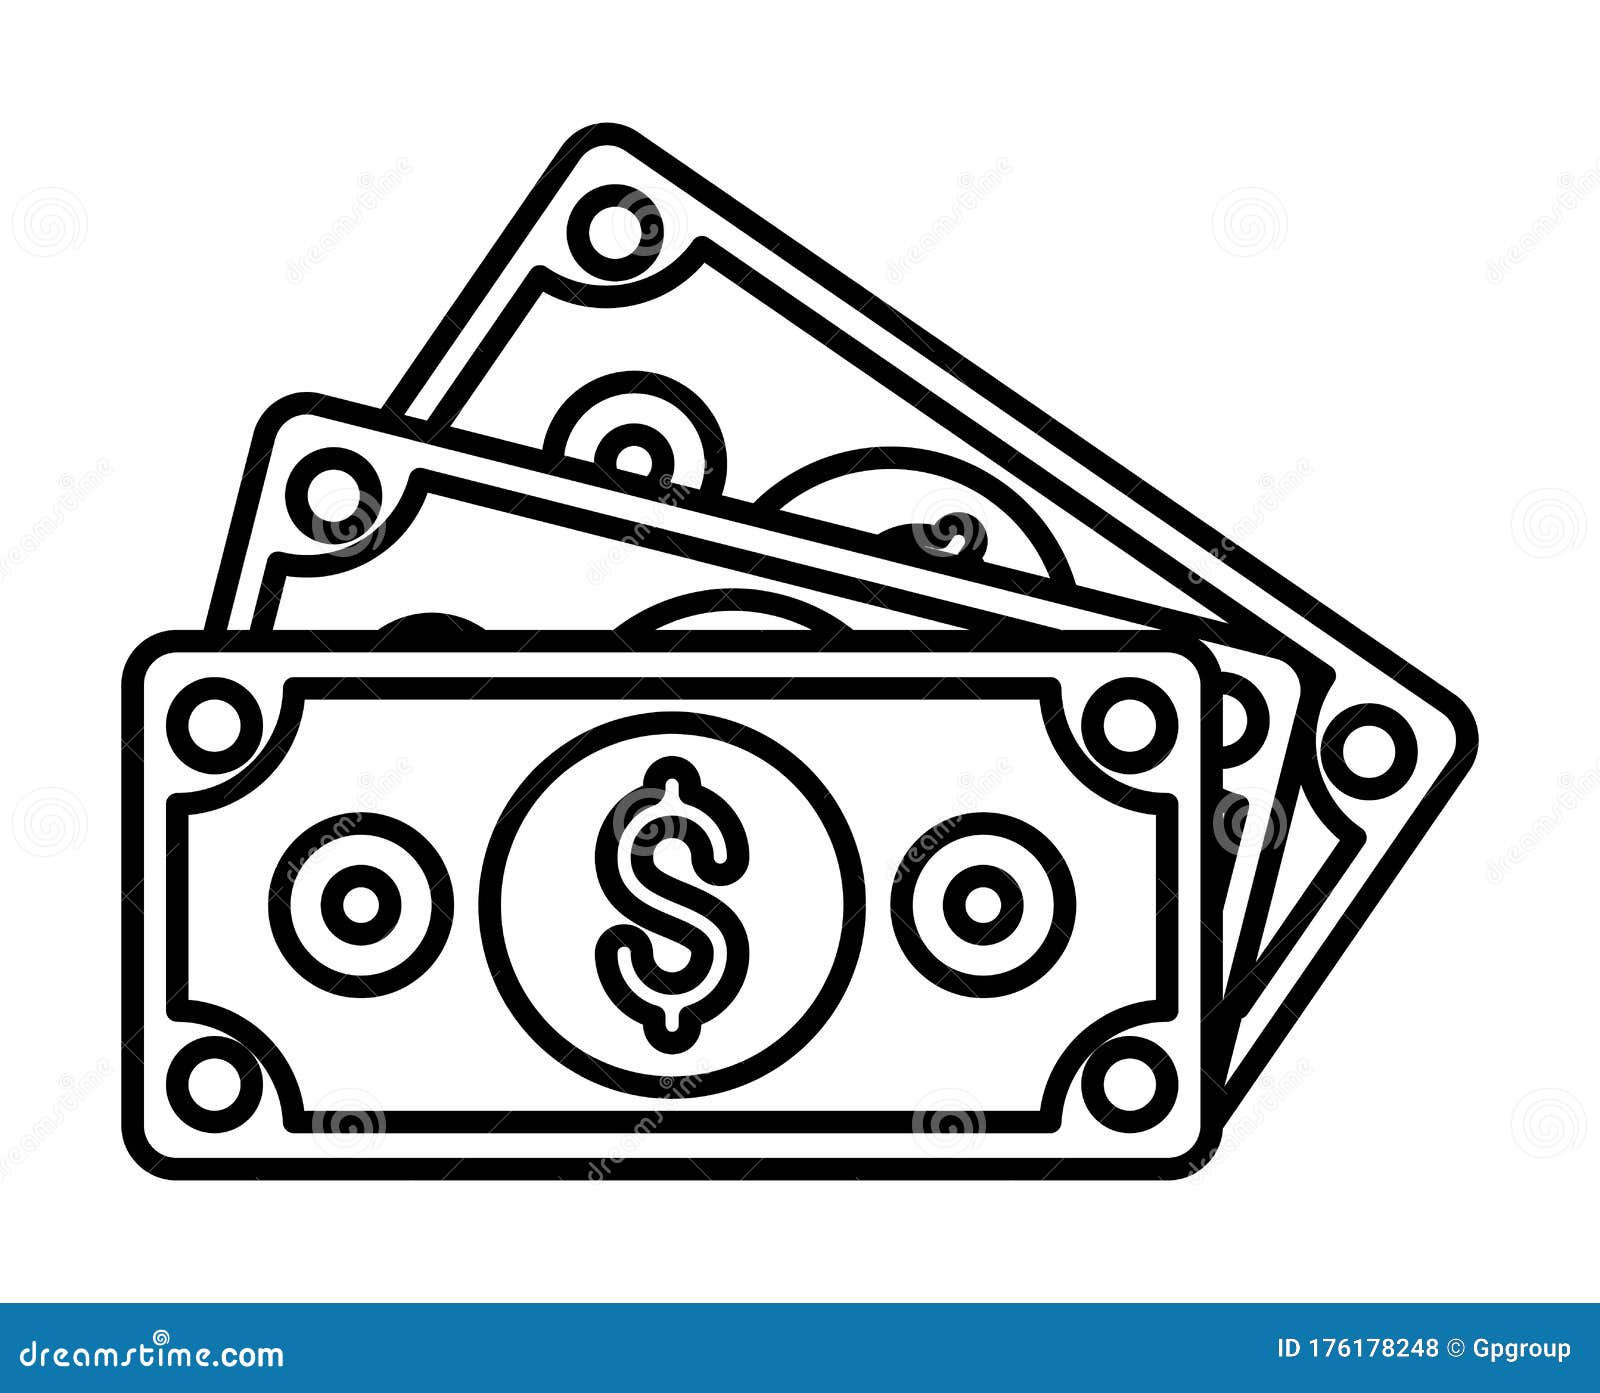 Isolated Money Bills Vector Design Stock Vector Illustration Of Finance Economy